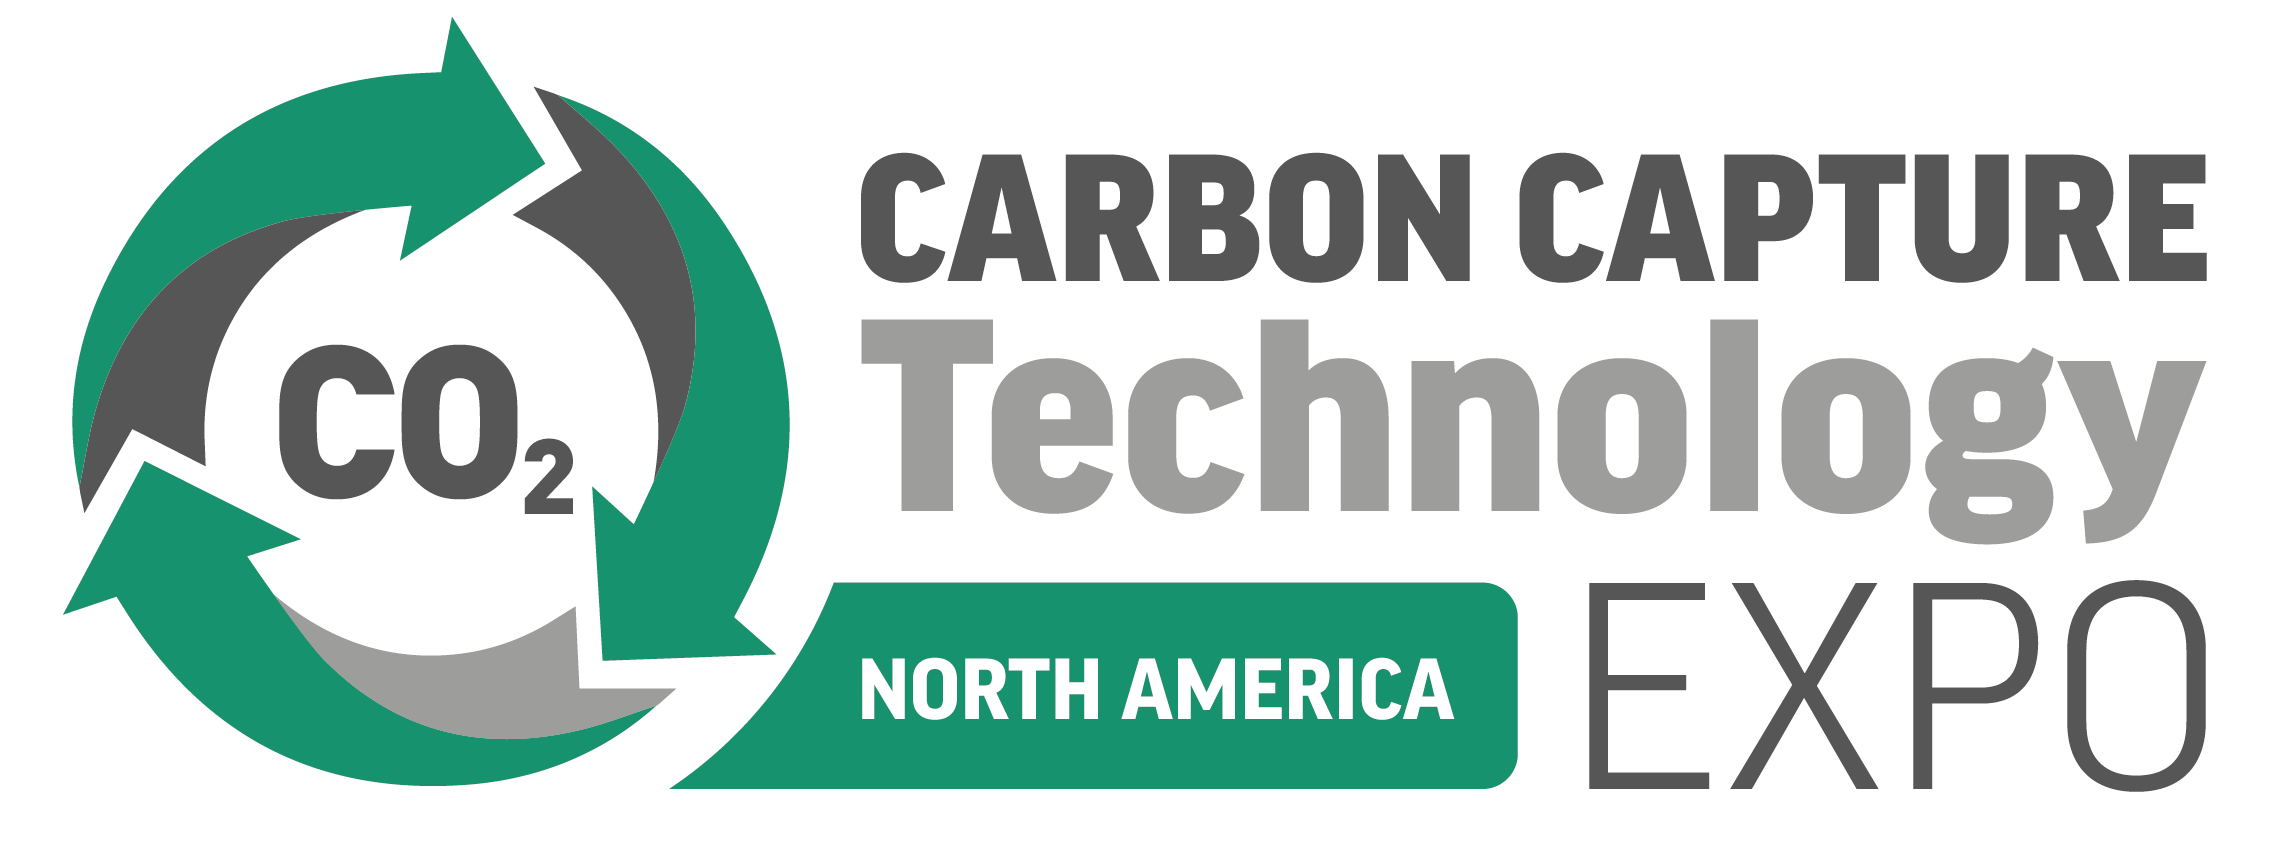 Carbon Capture Technology Expo Logo